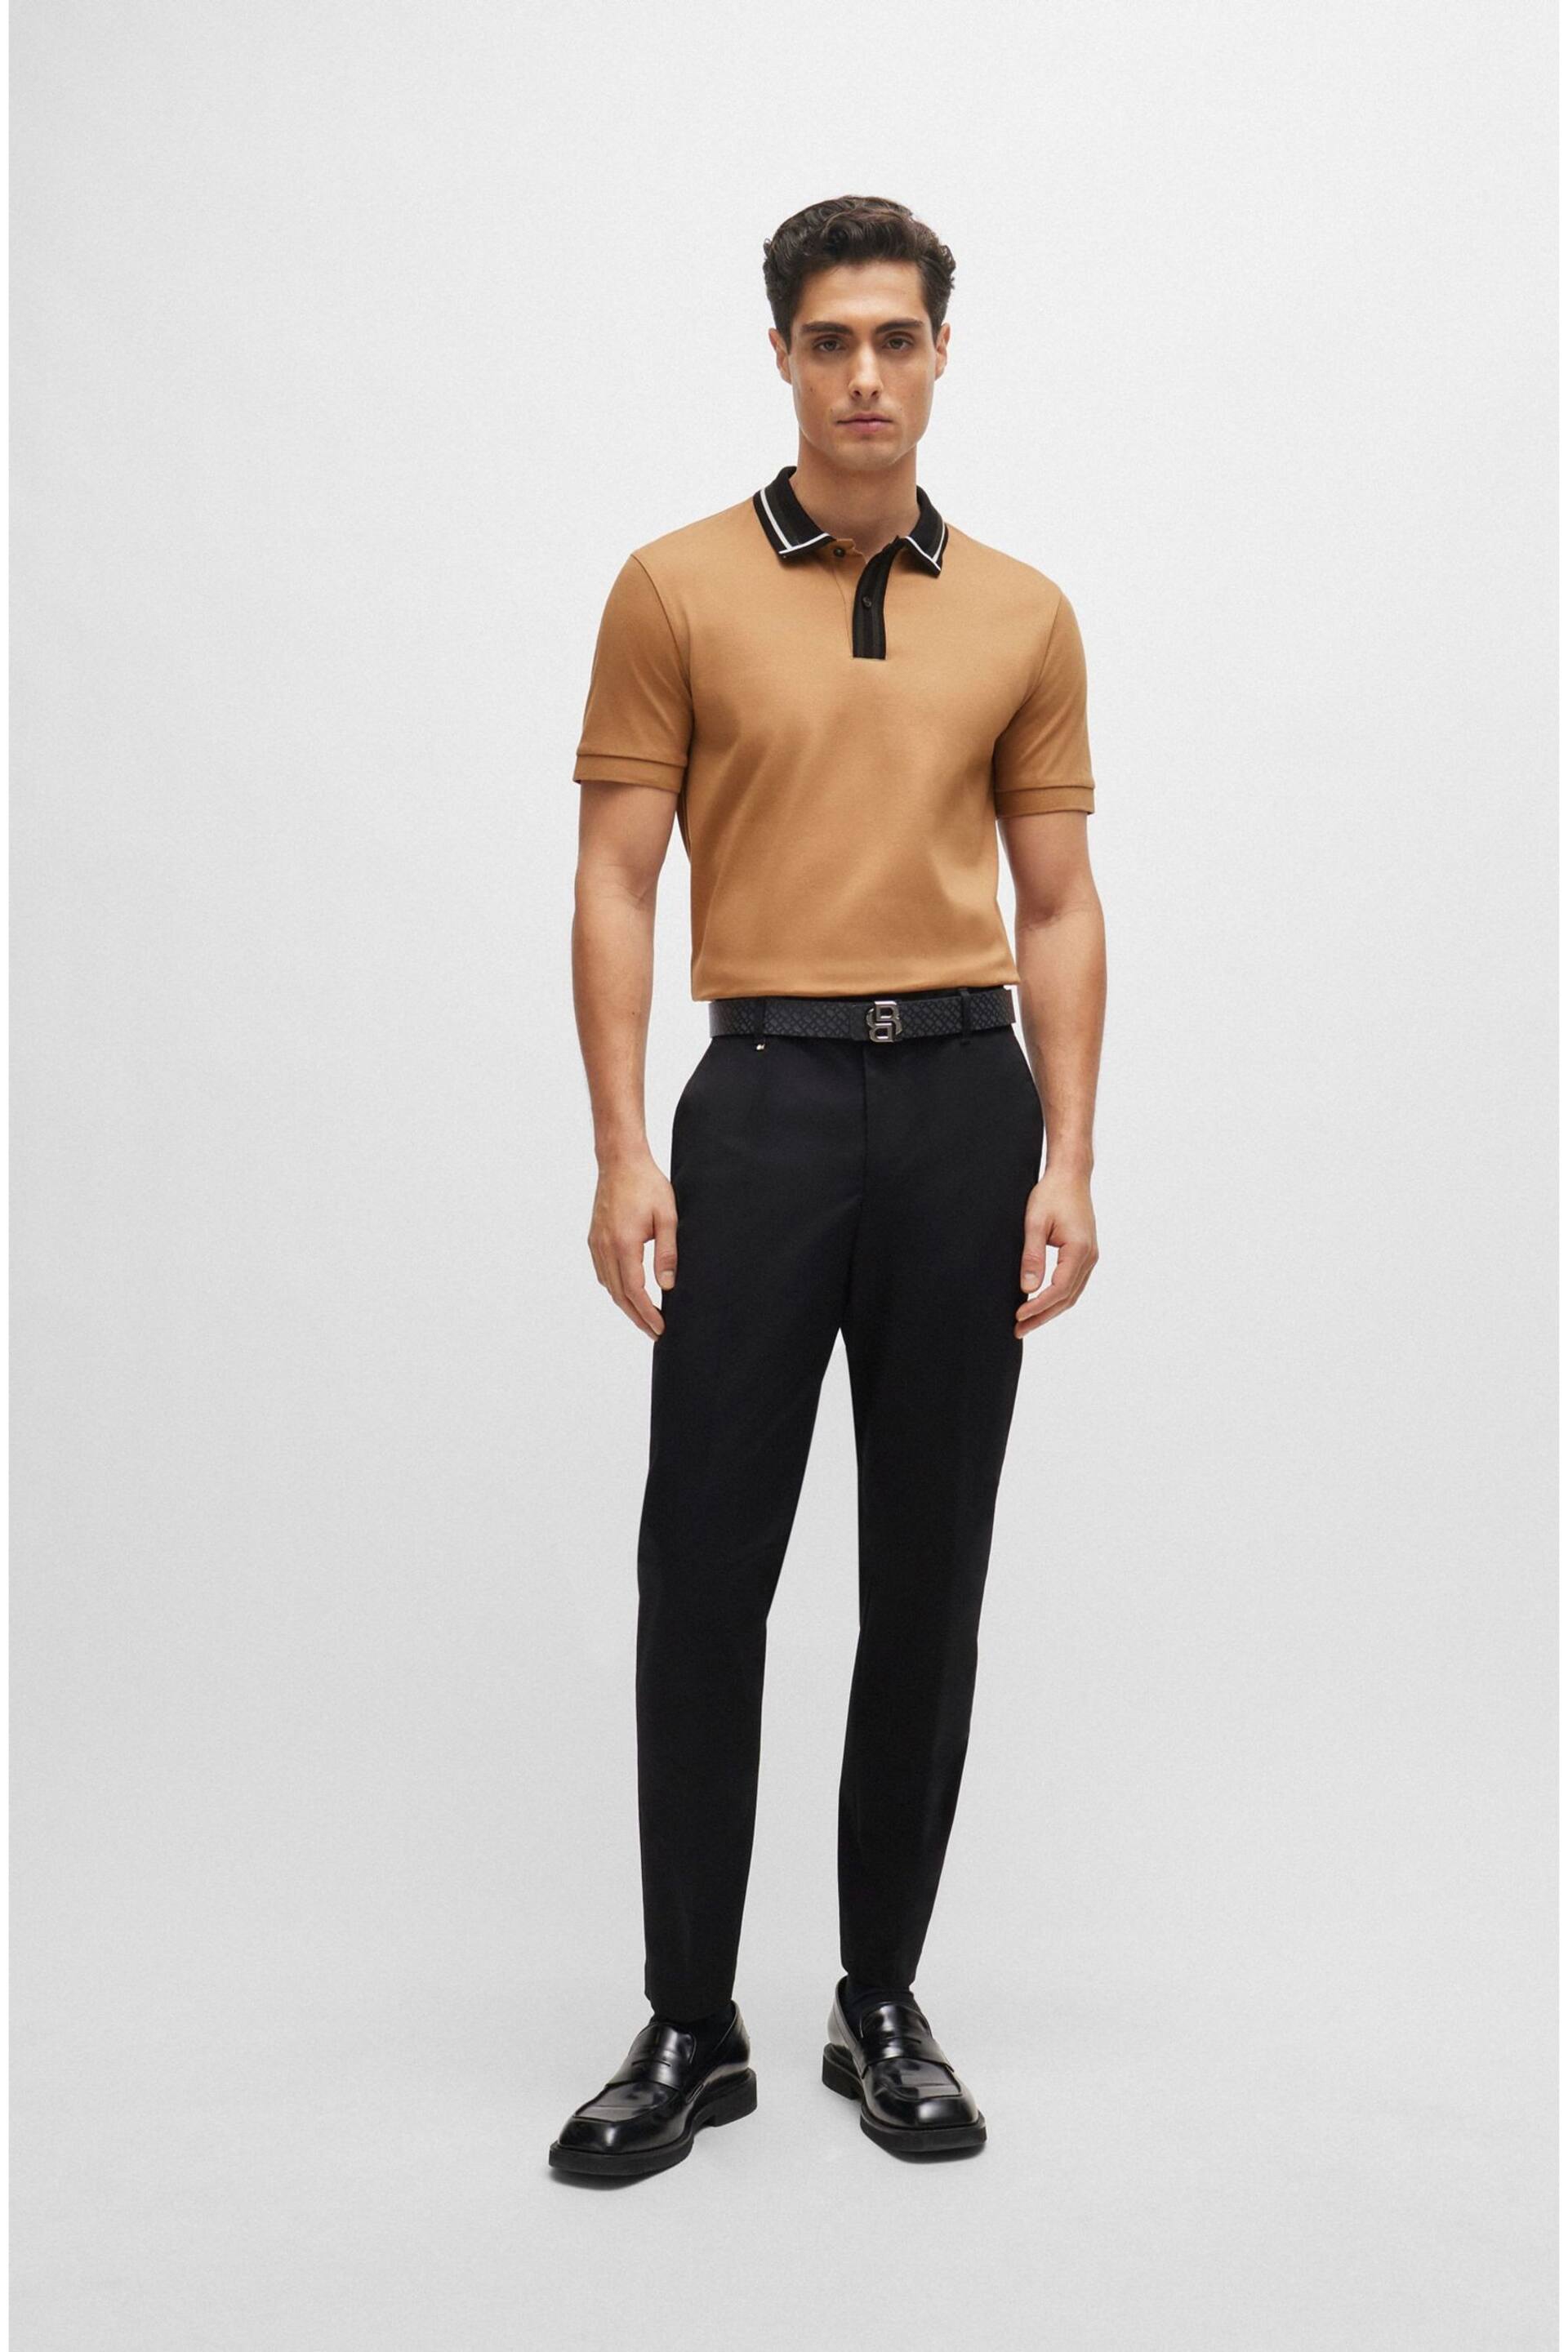 BOSS Tan Brown Contrast Collar Slim Fit Polo Shirt - Image 4 of 5